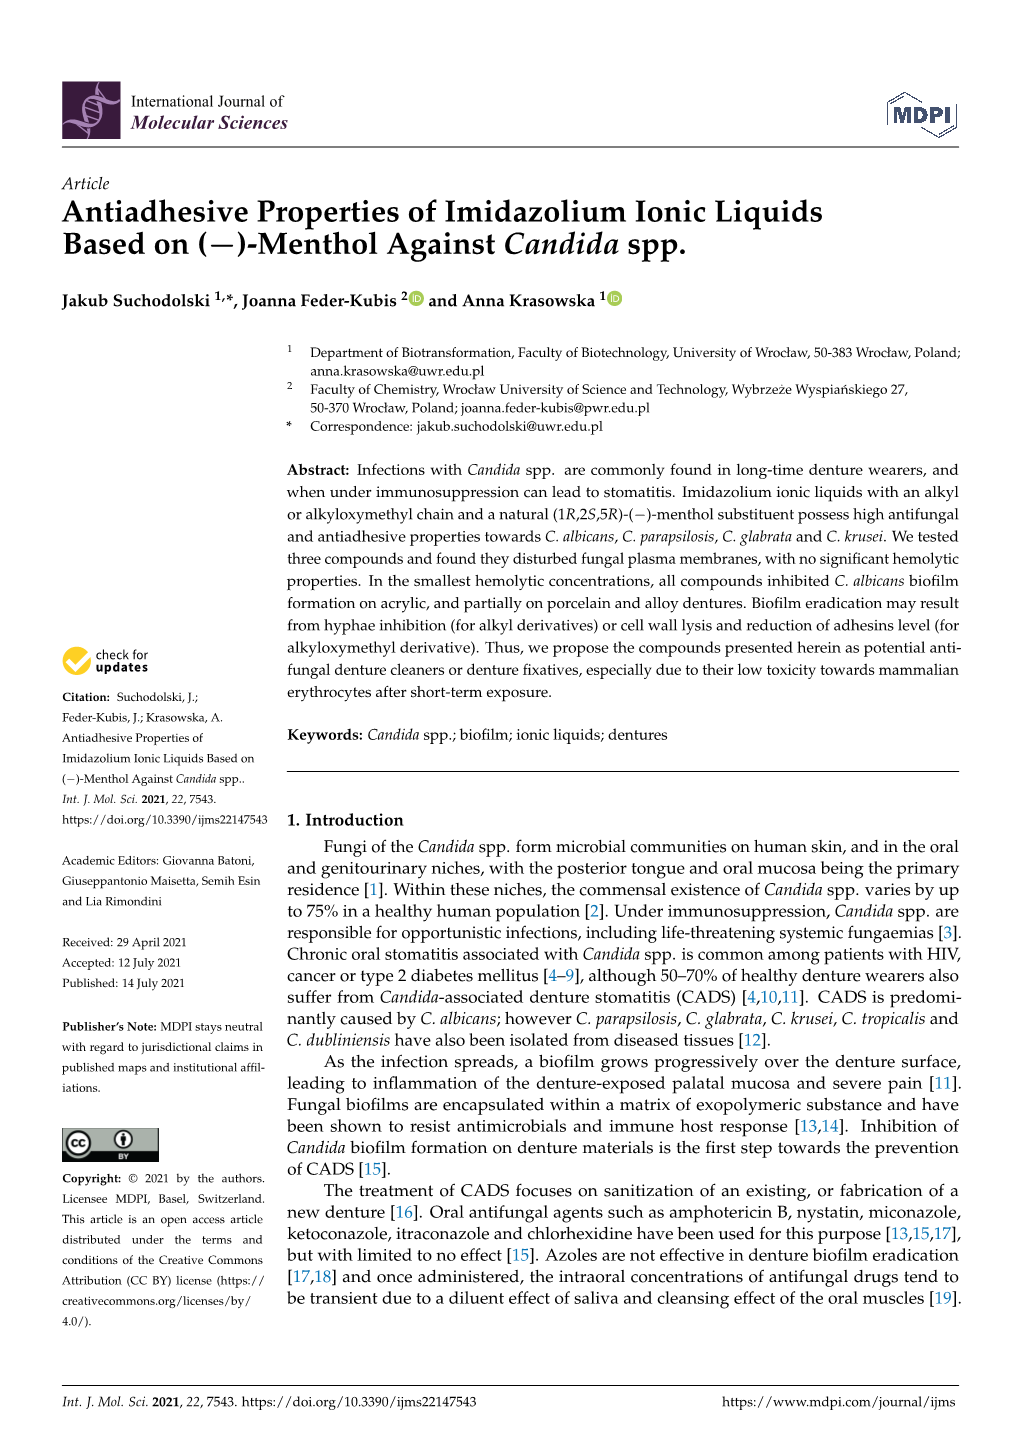 Antiadhesive Properties of Imidazolium Ionic Liquids Based on (−)-Menthol Against Candida Spp